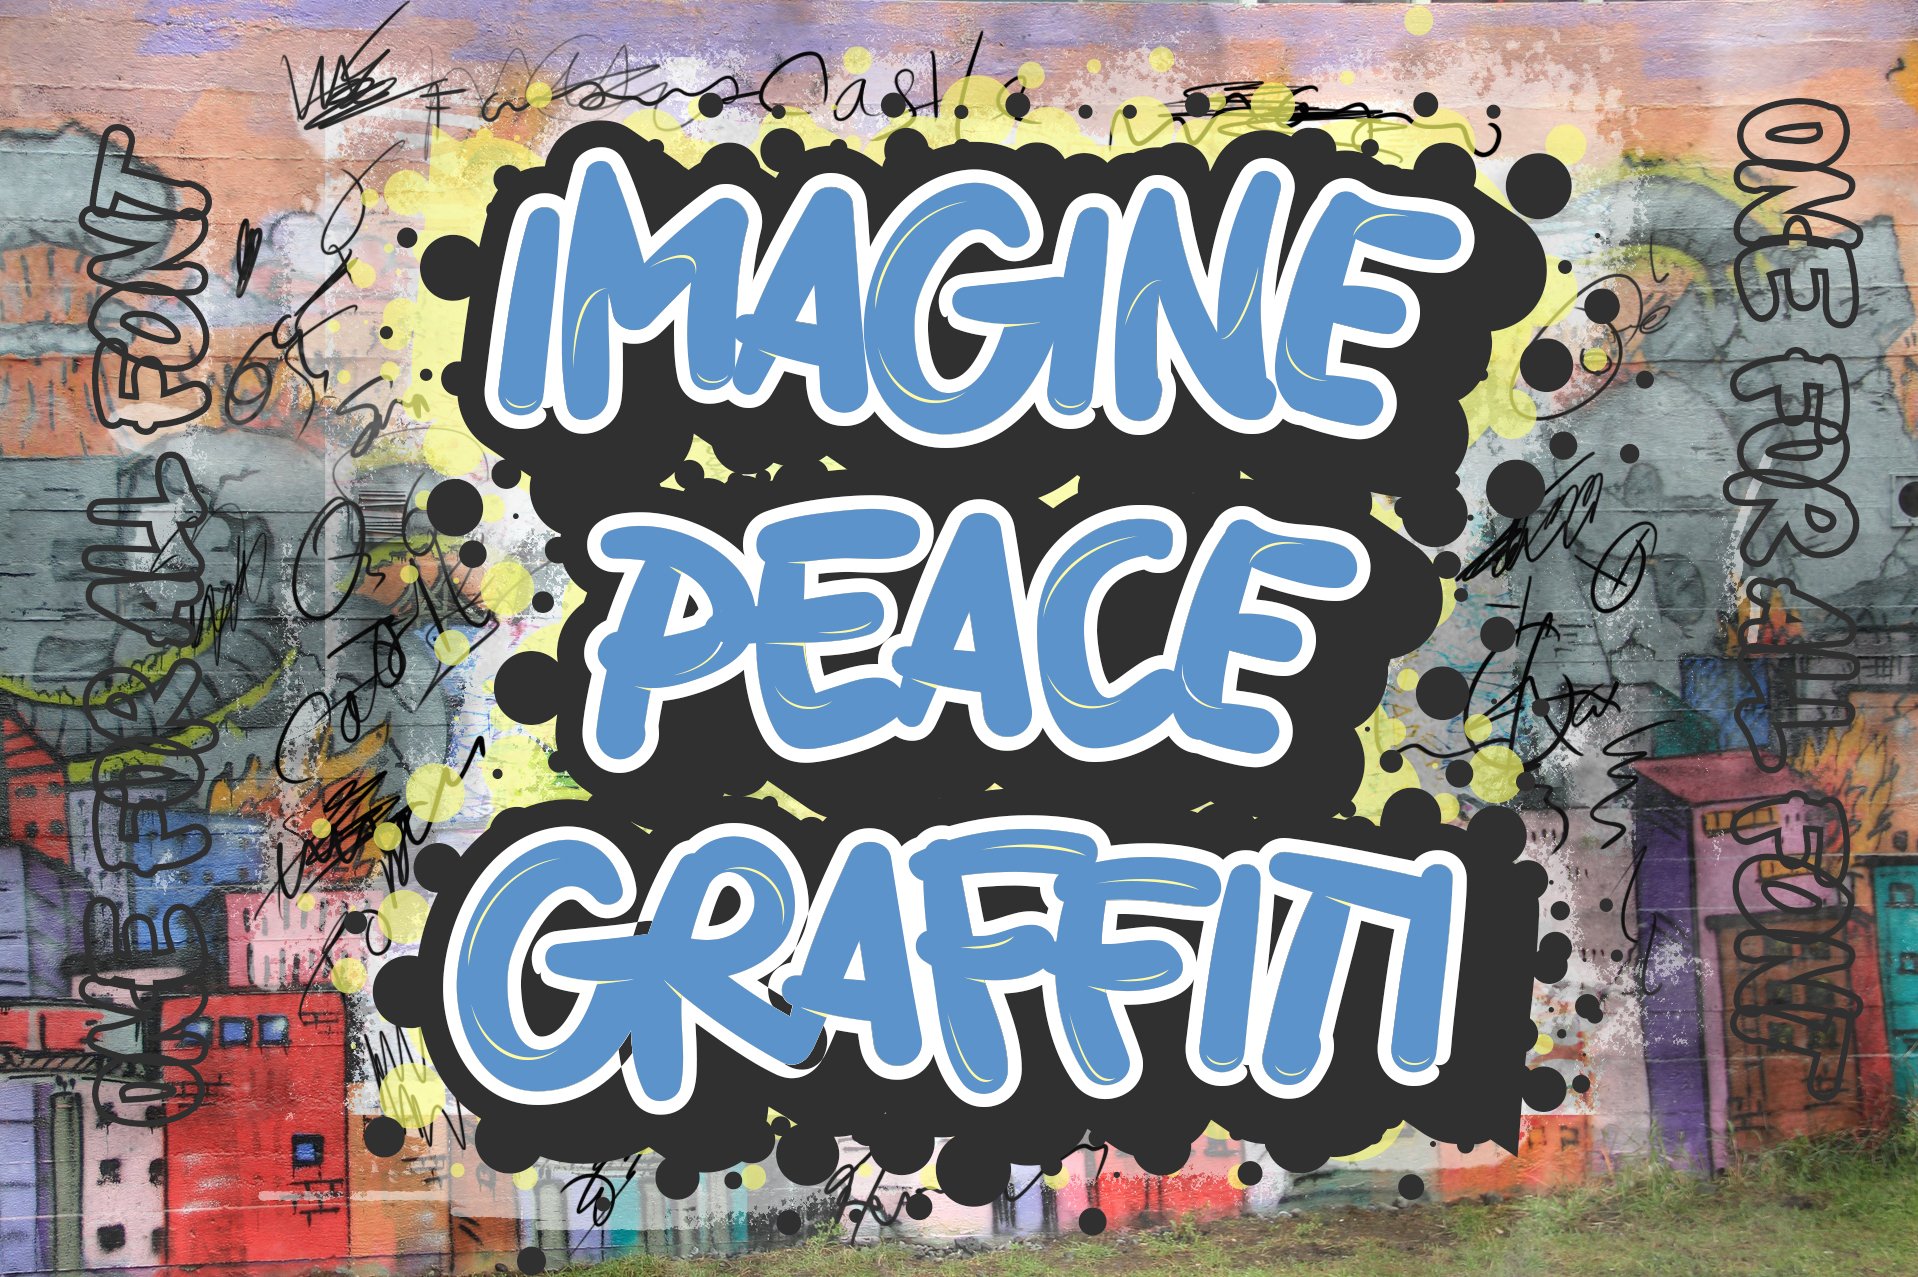 Imagine Peace Graffiti cover image.